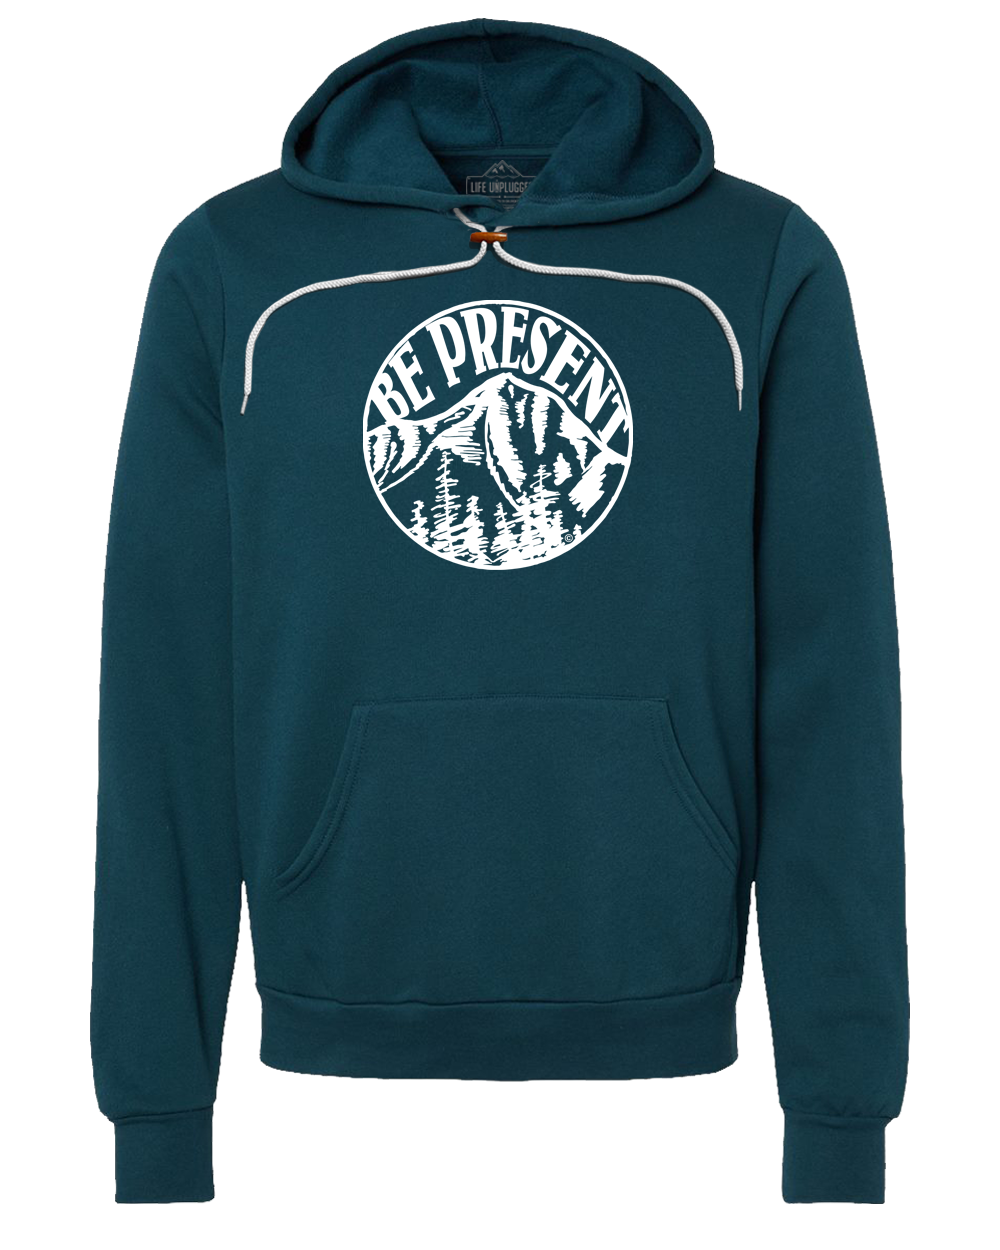 Be Present Mountain Premium Super Soft Hooded Sweatshirt - Life Unplugged